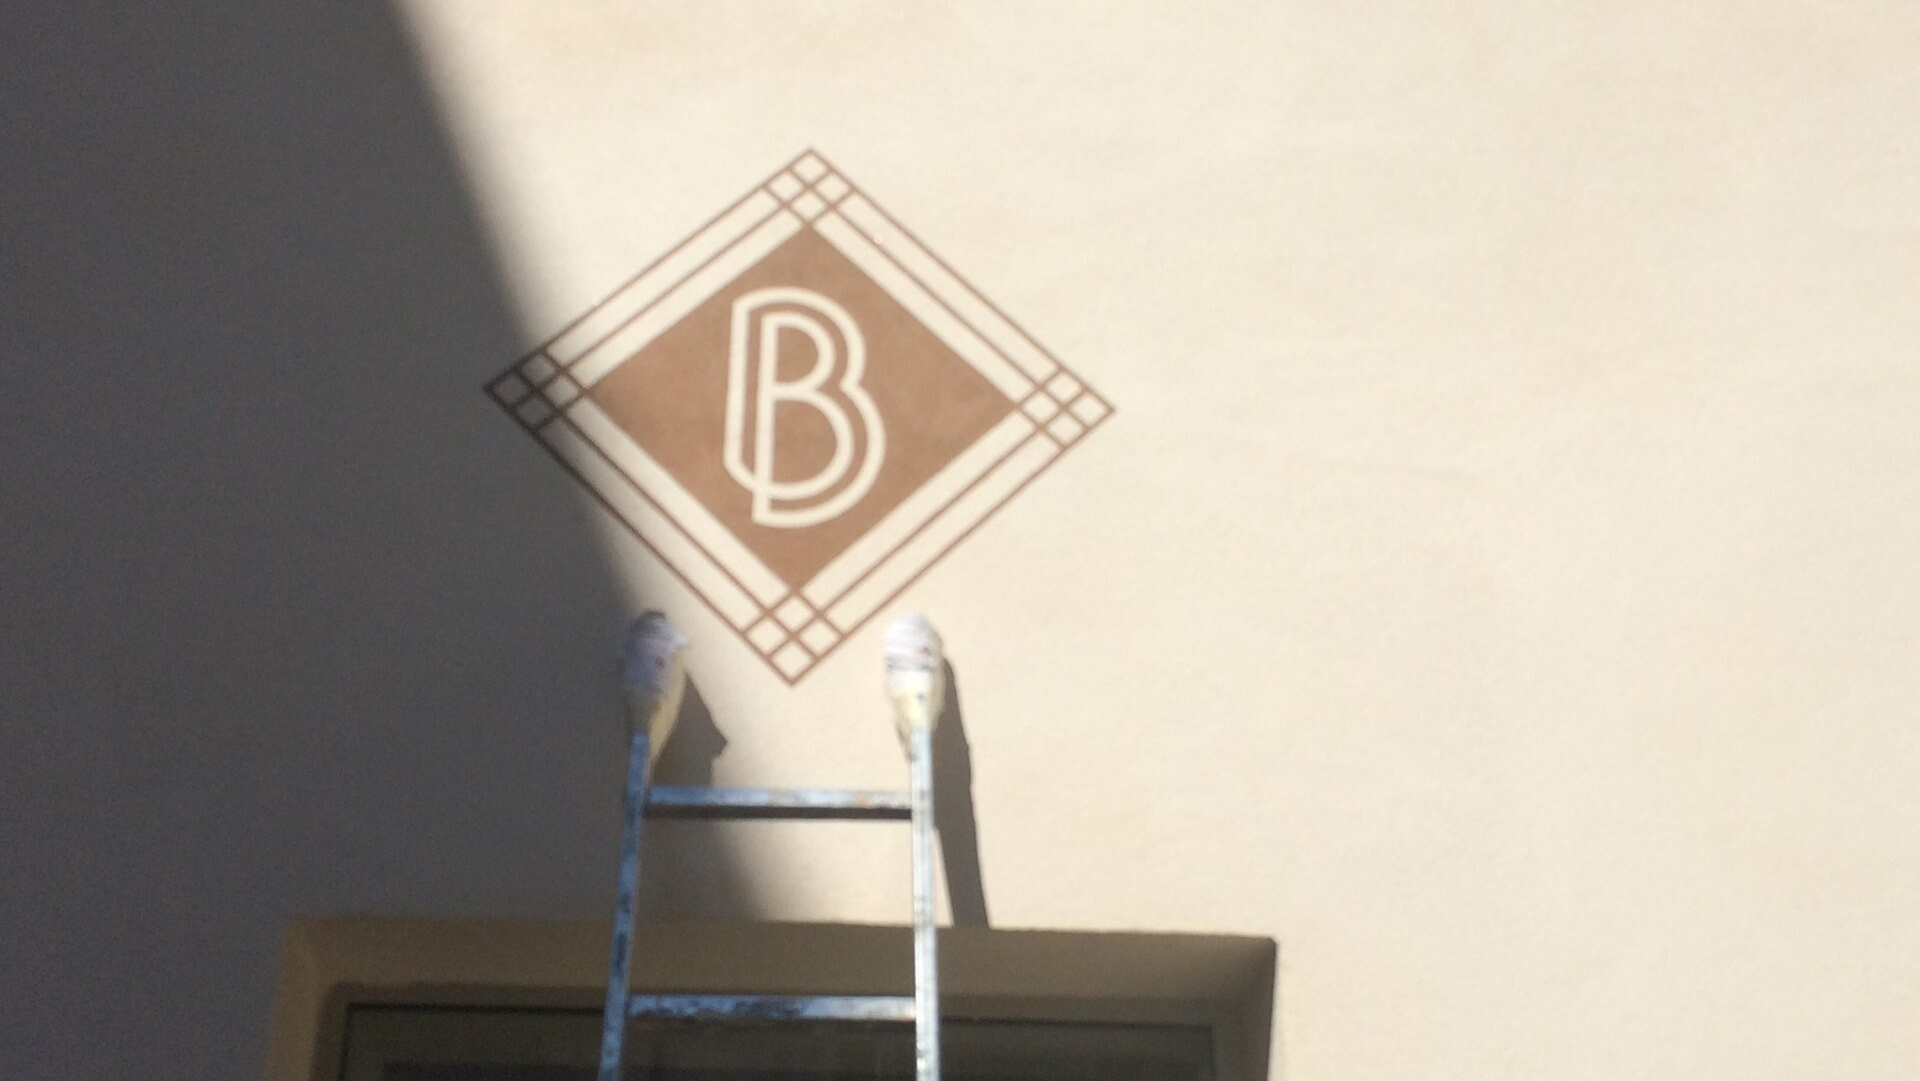 Logo B peint